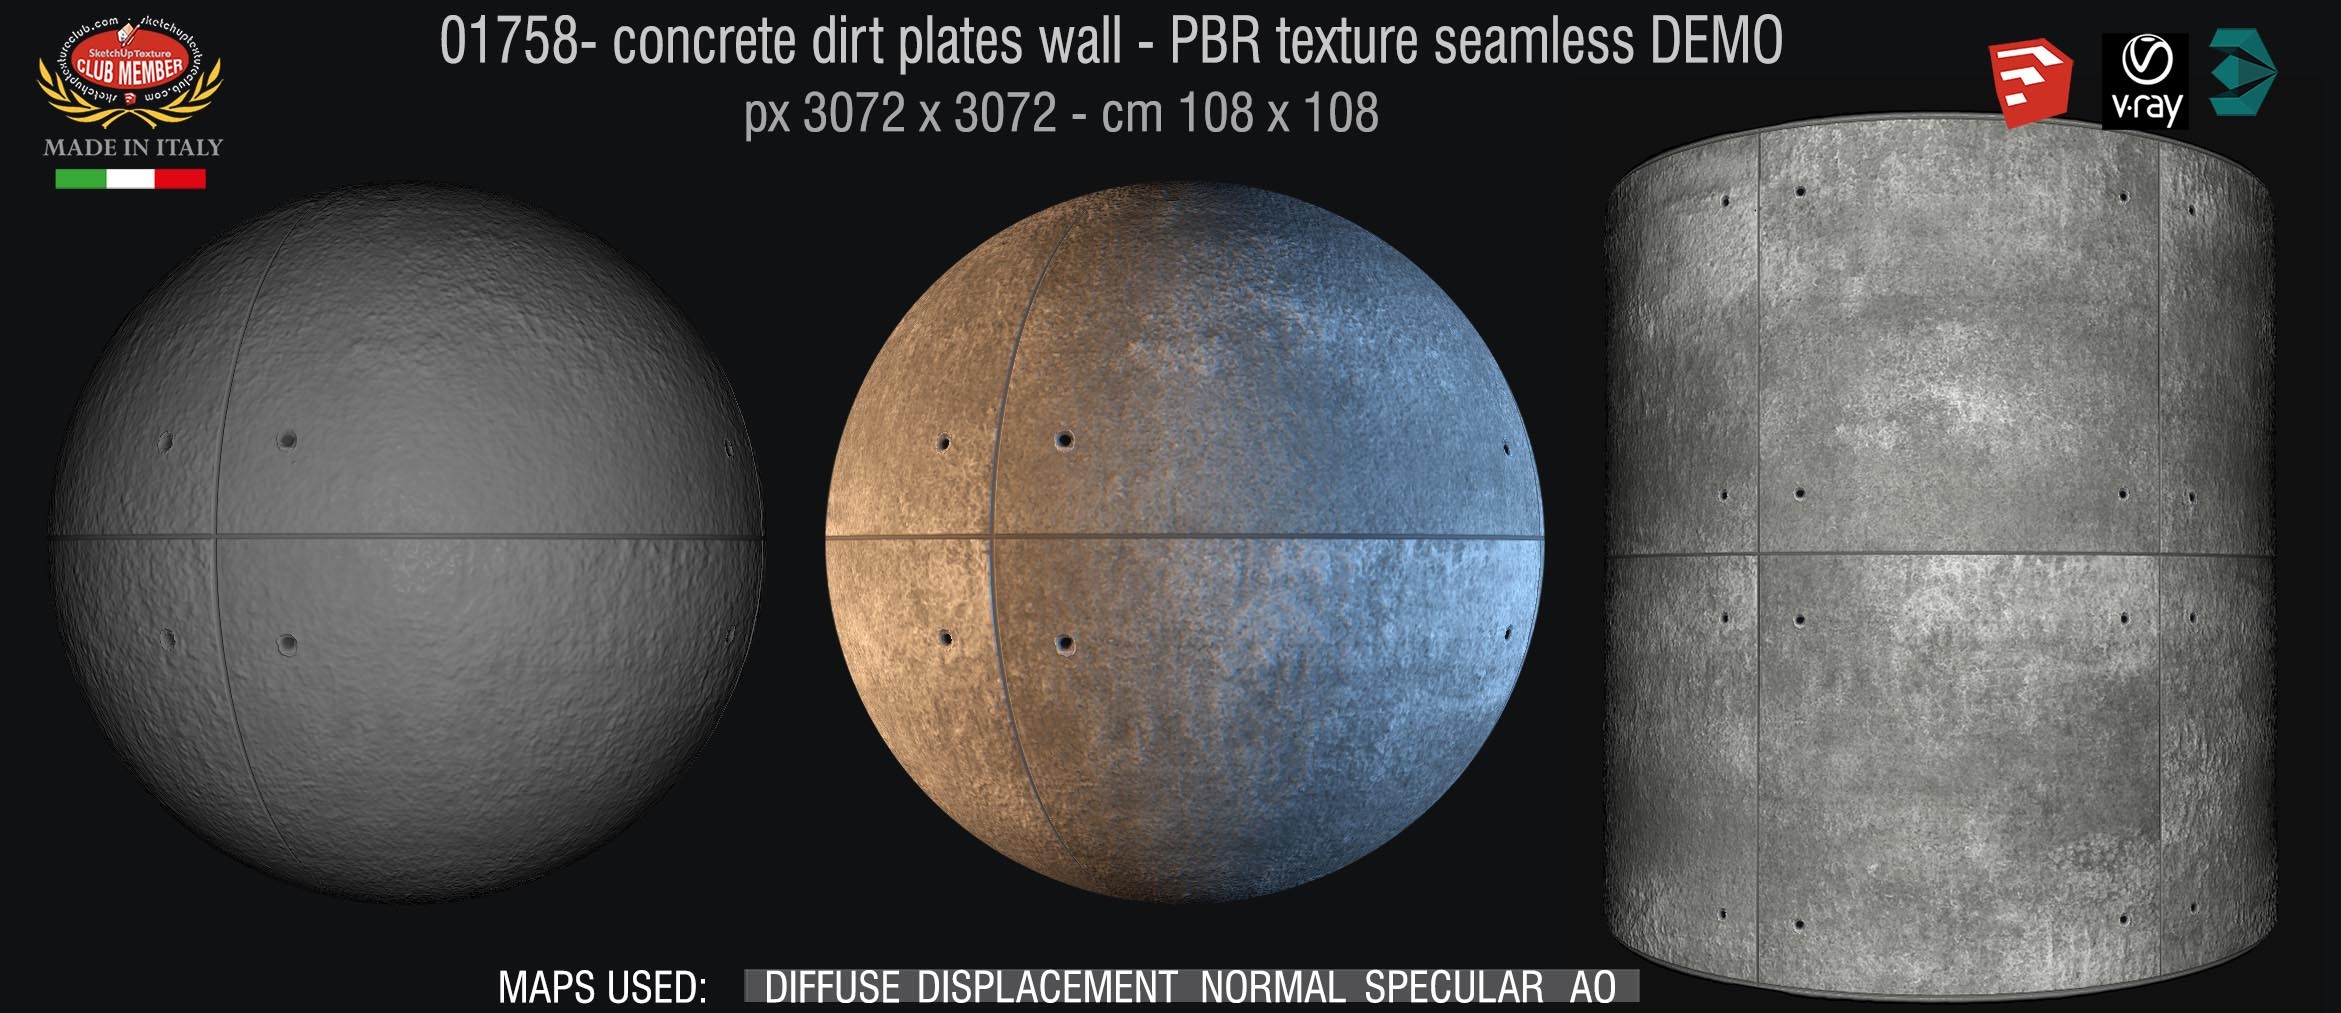 01758 Concrete dirt plates wall PBR texture seamless DEMO